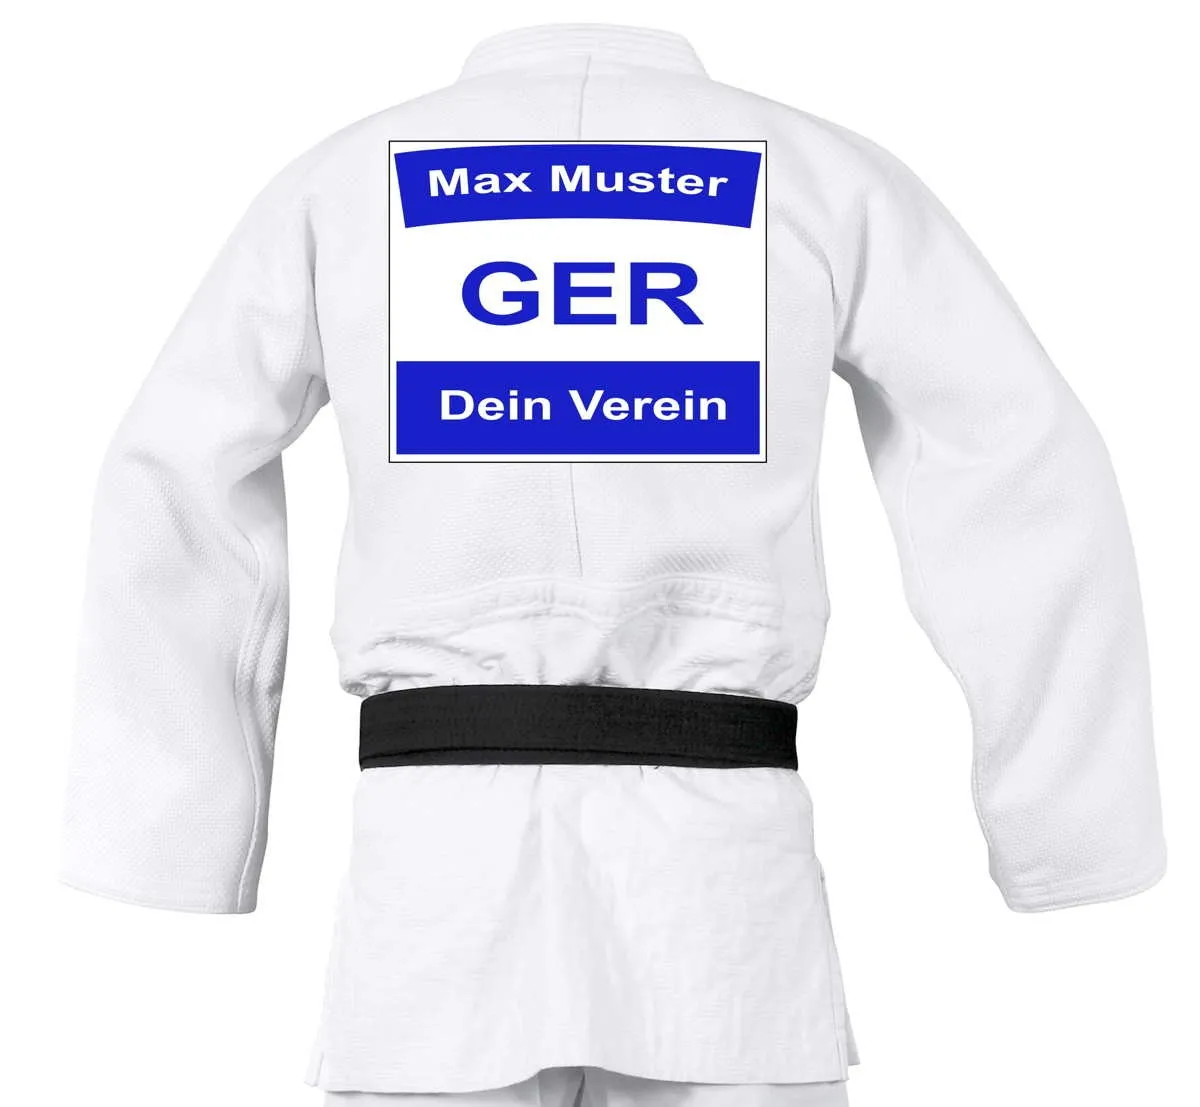 Etiqueta trasera del traje de judo